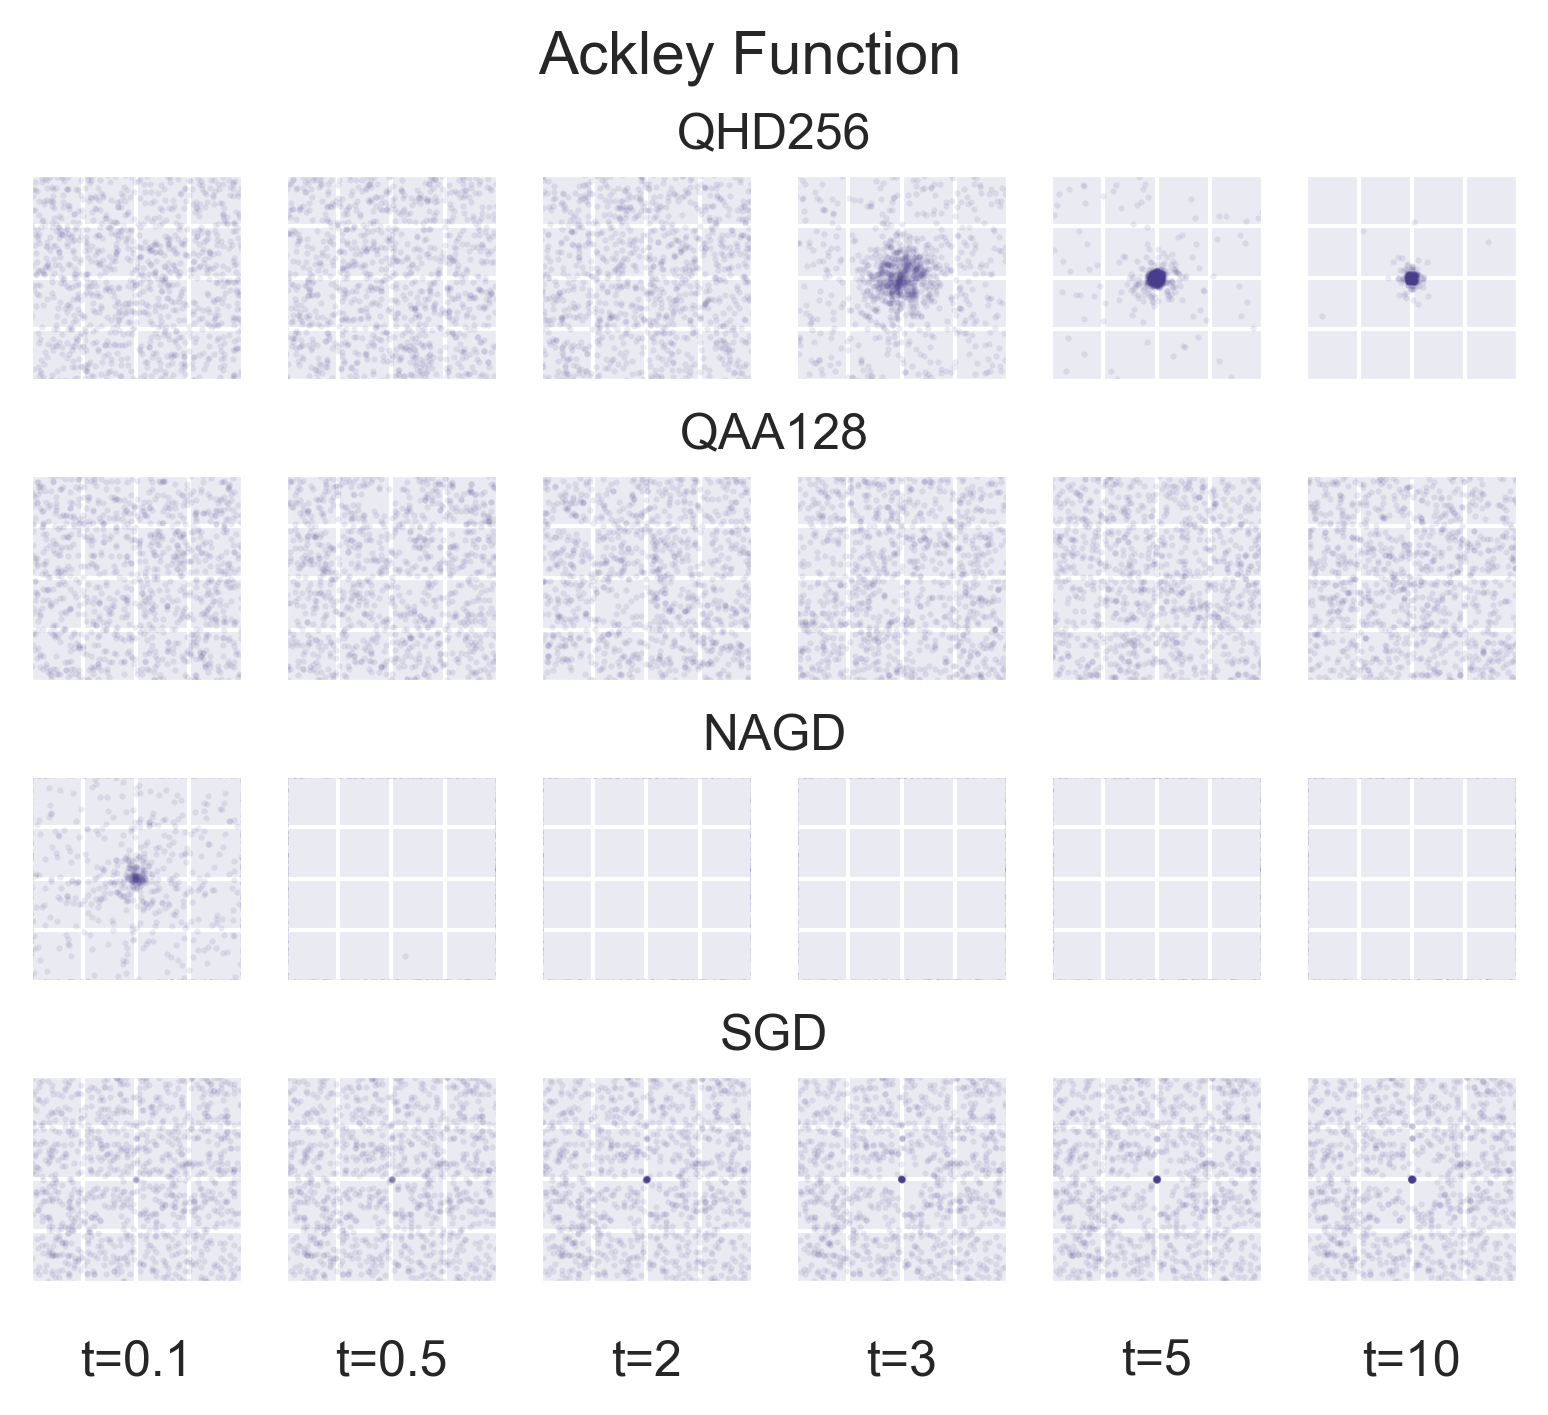 Comparison of optimization methods on ackley